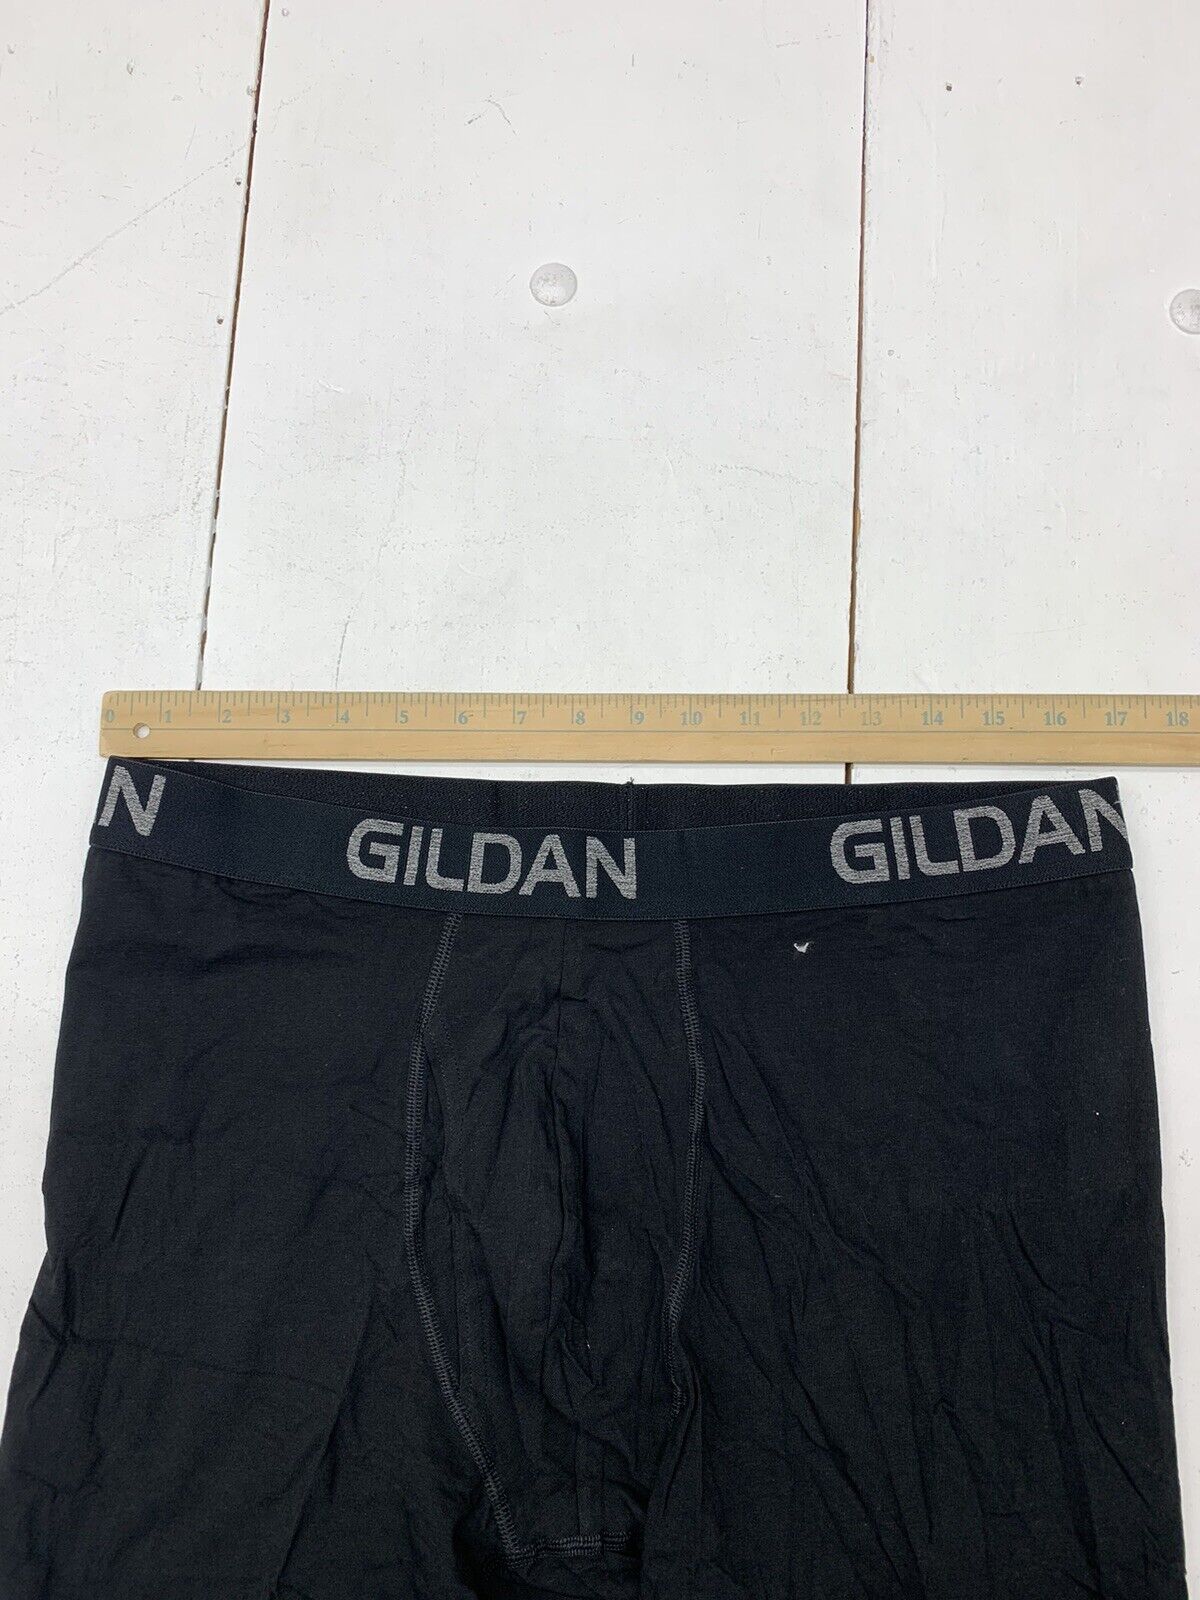 Gildan Men's Briefs